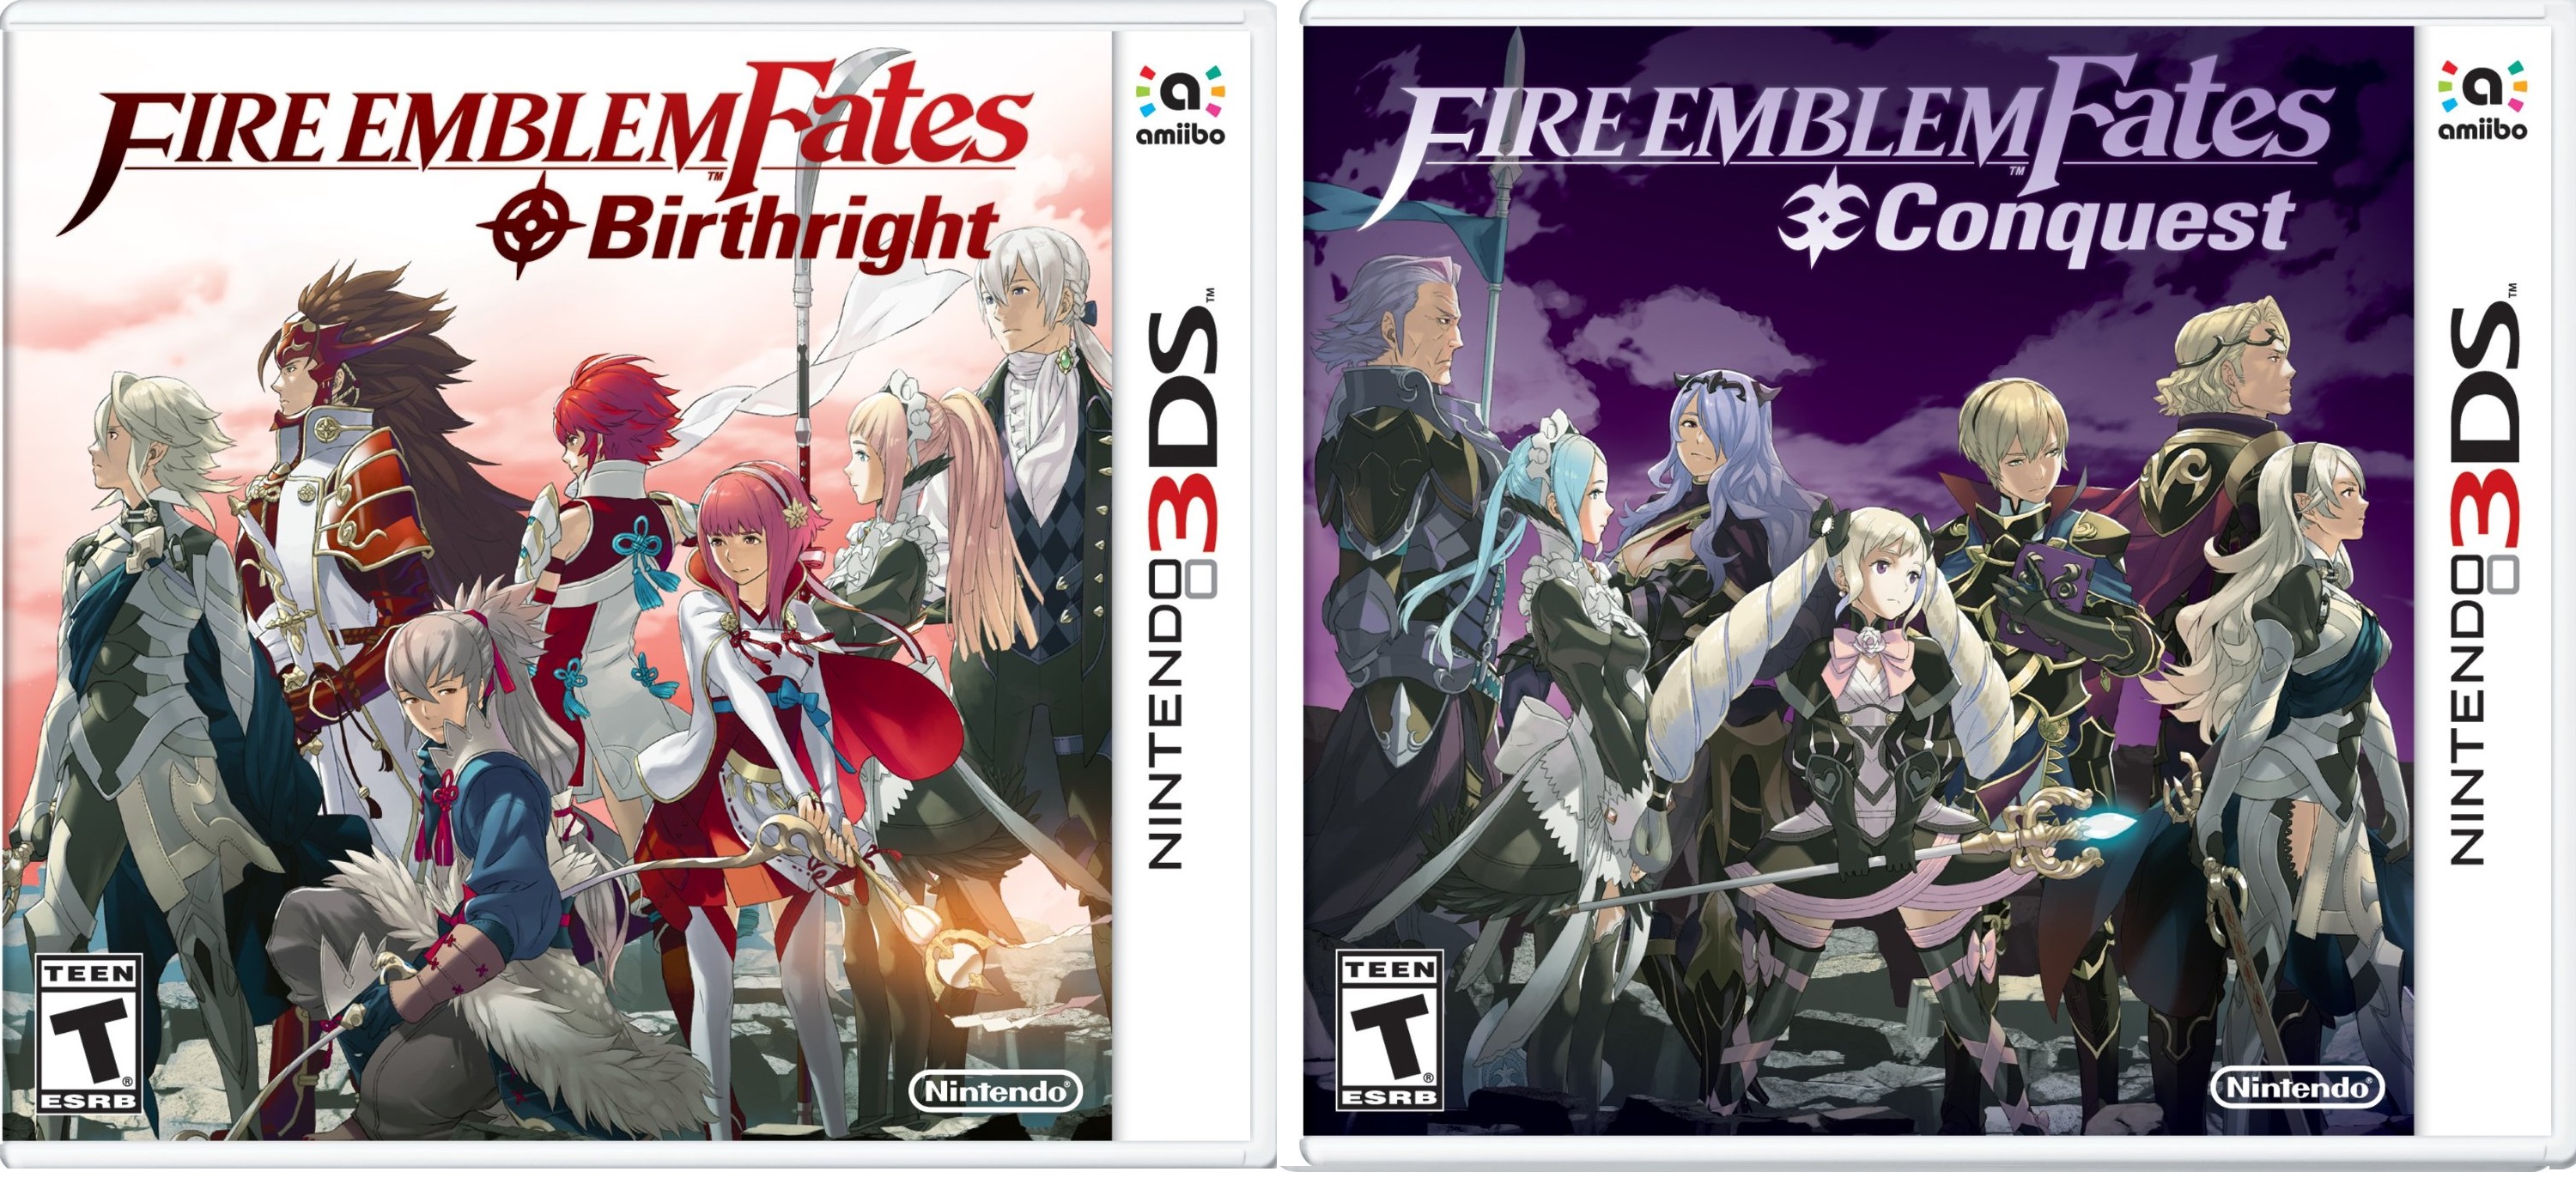 Fire Emblem Fates Review (Nintendo 3DS) - Official GBAtemp Review